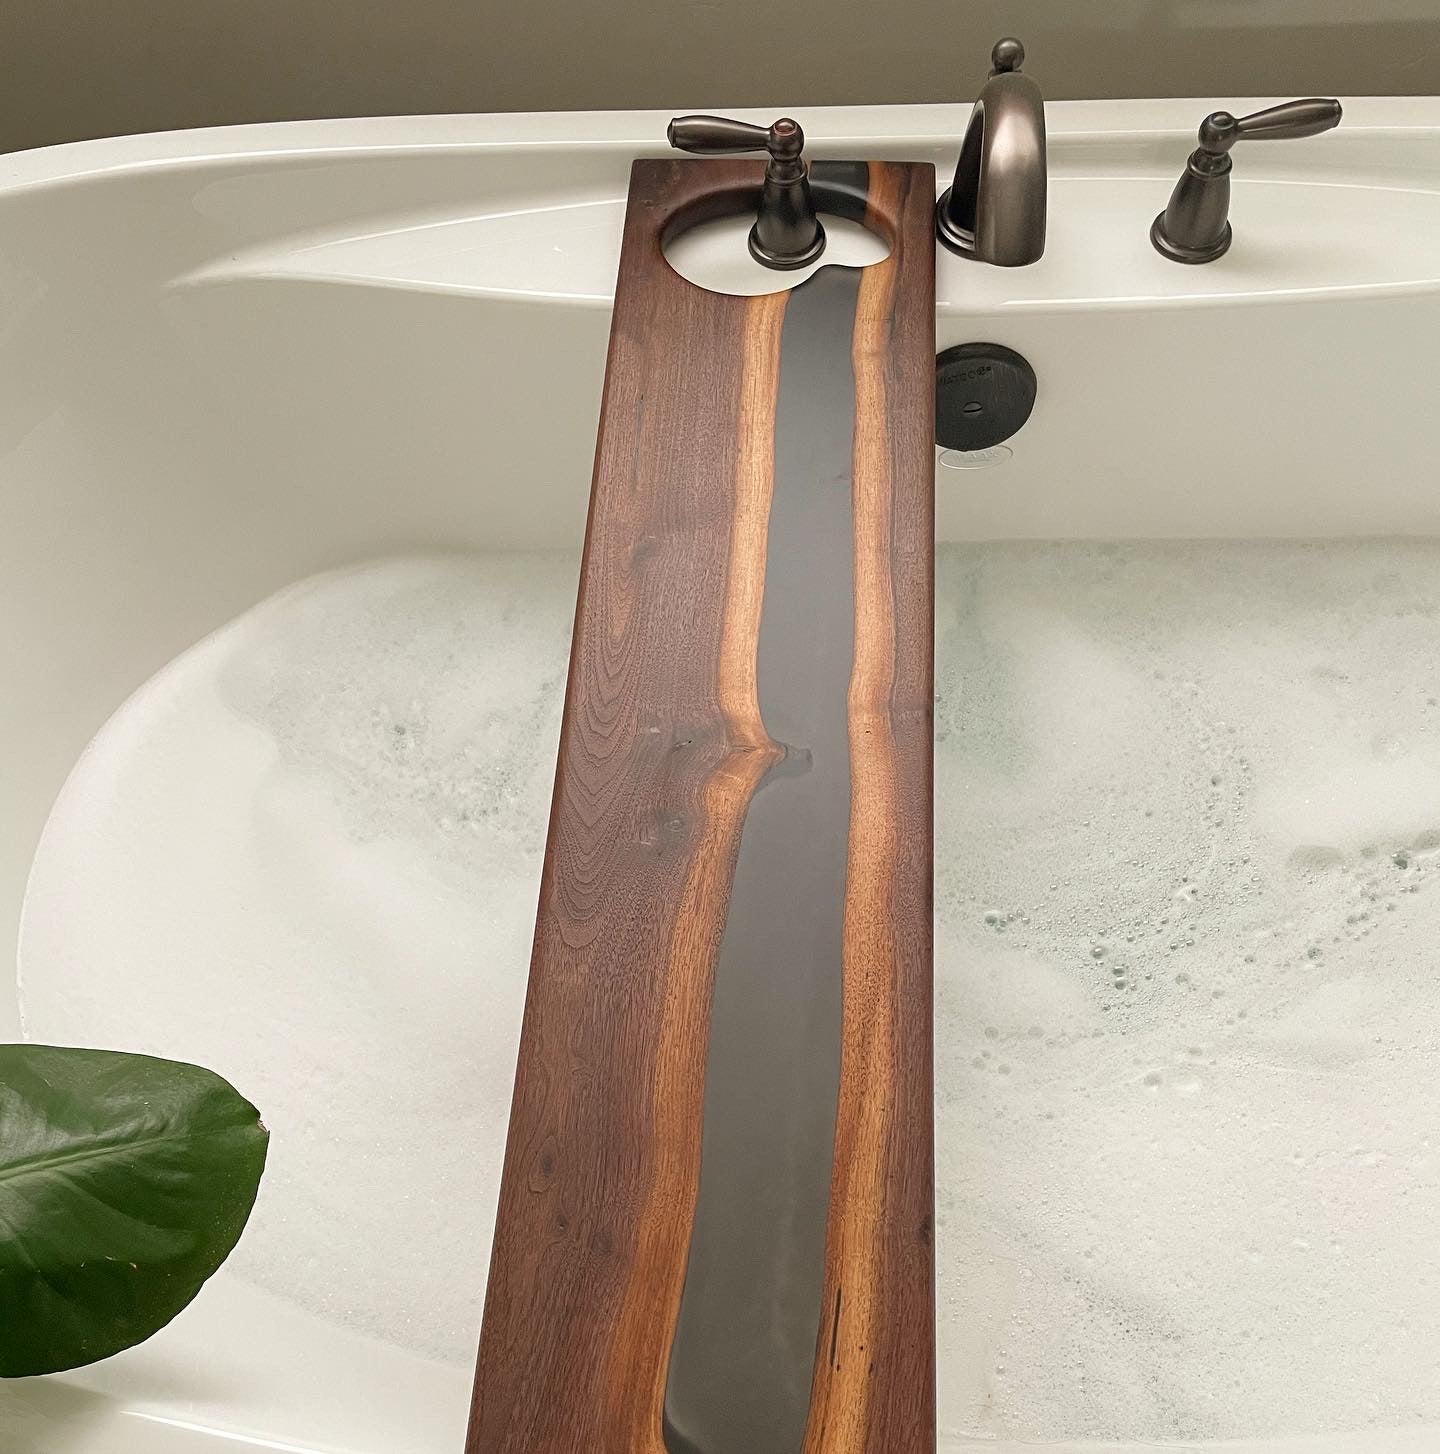 Bathtub Rack Made With Epoxy and Olive Wood, Bathtub Shelf Wood